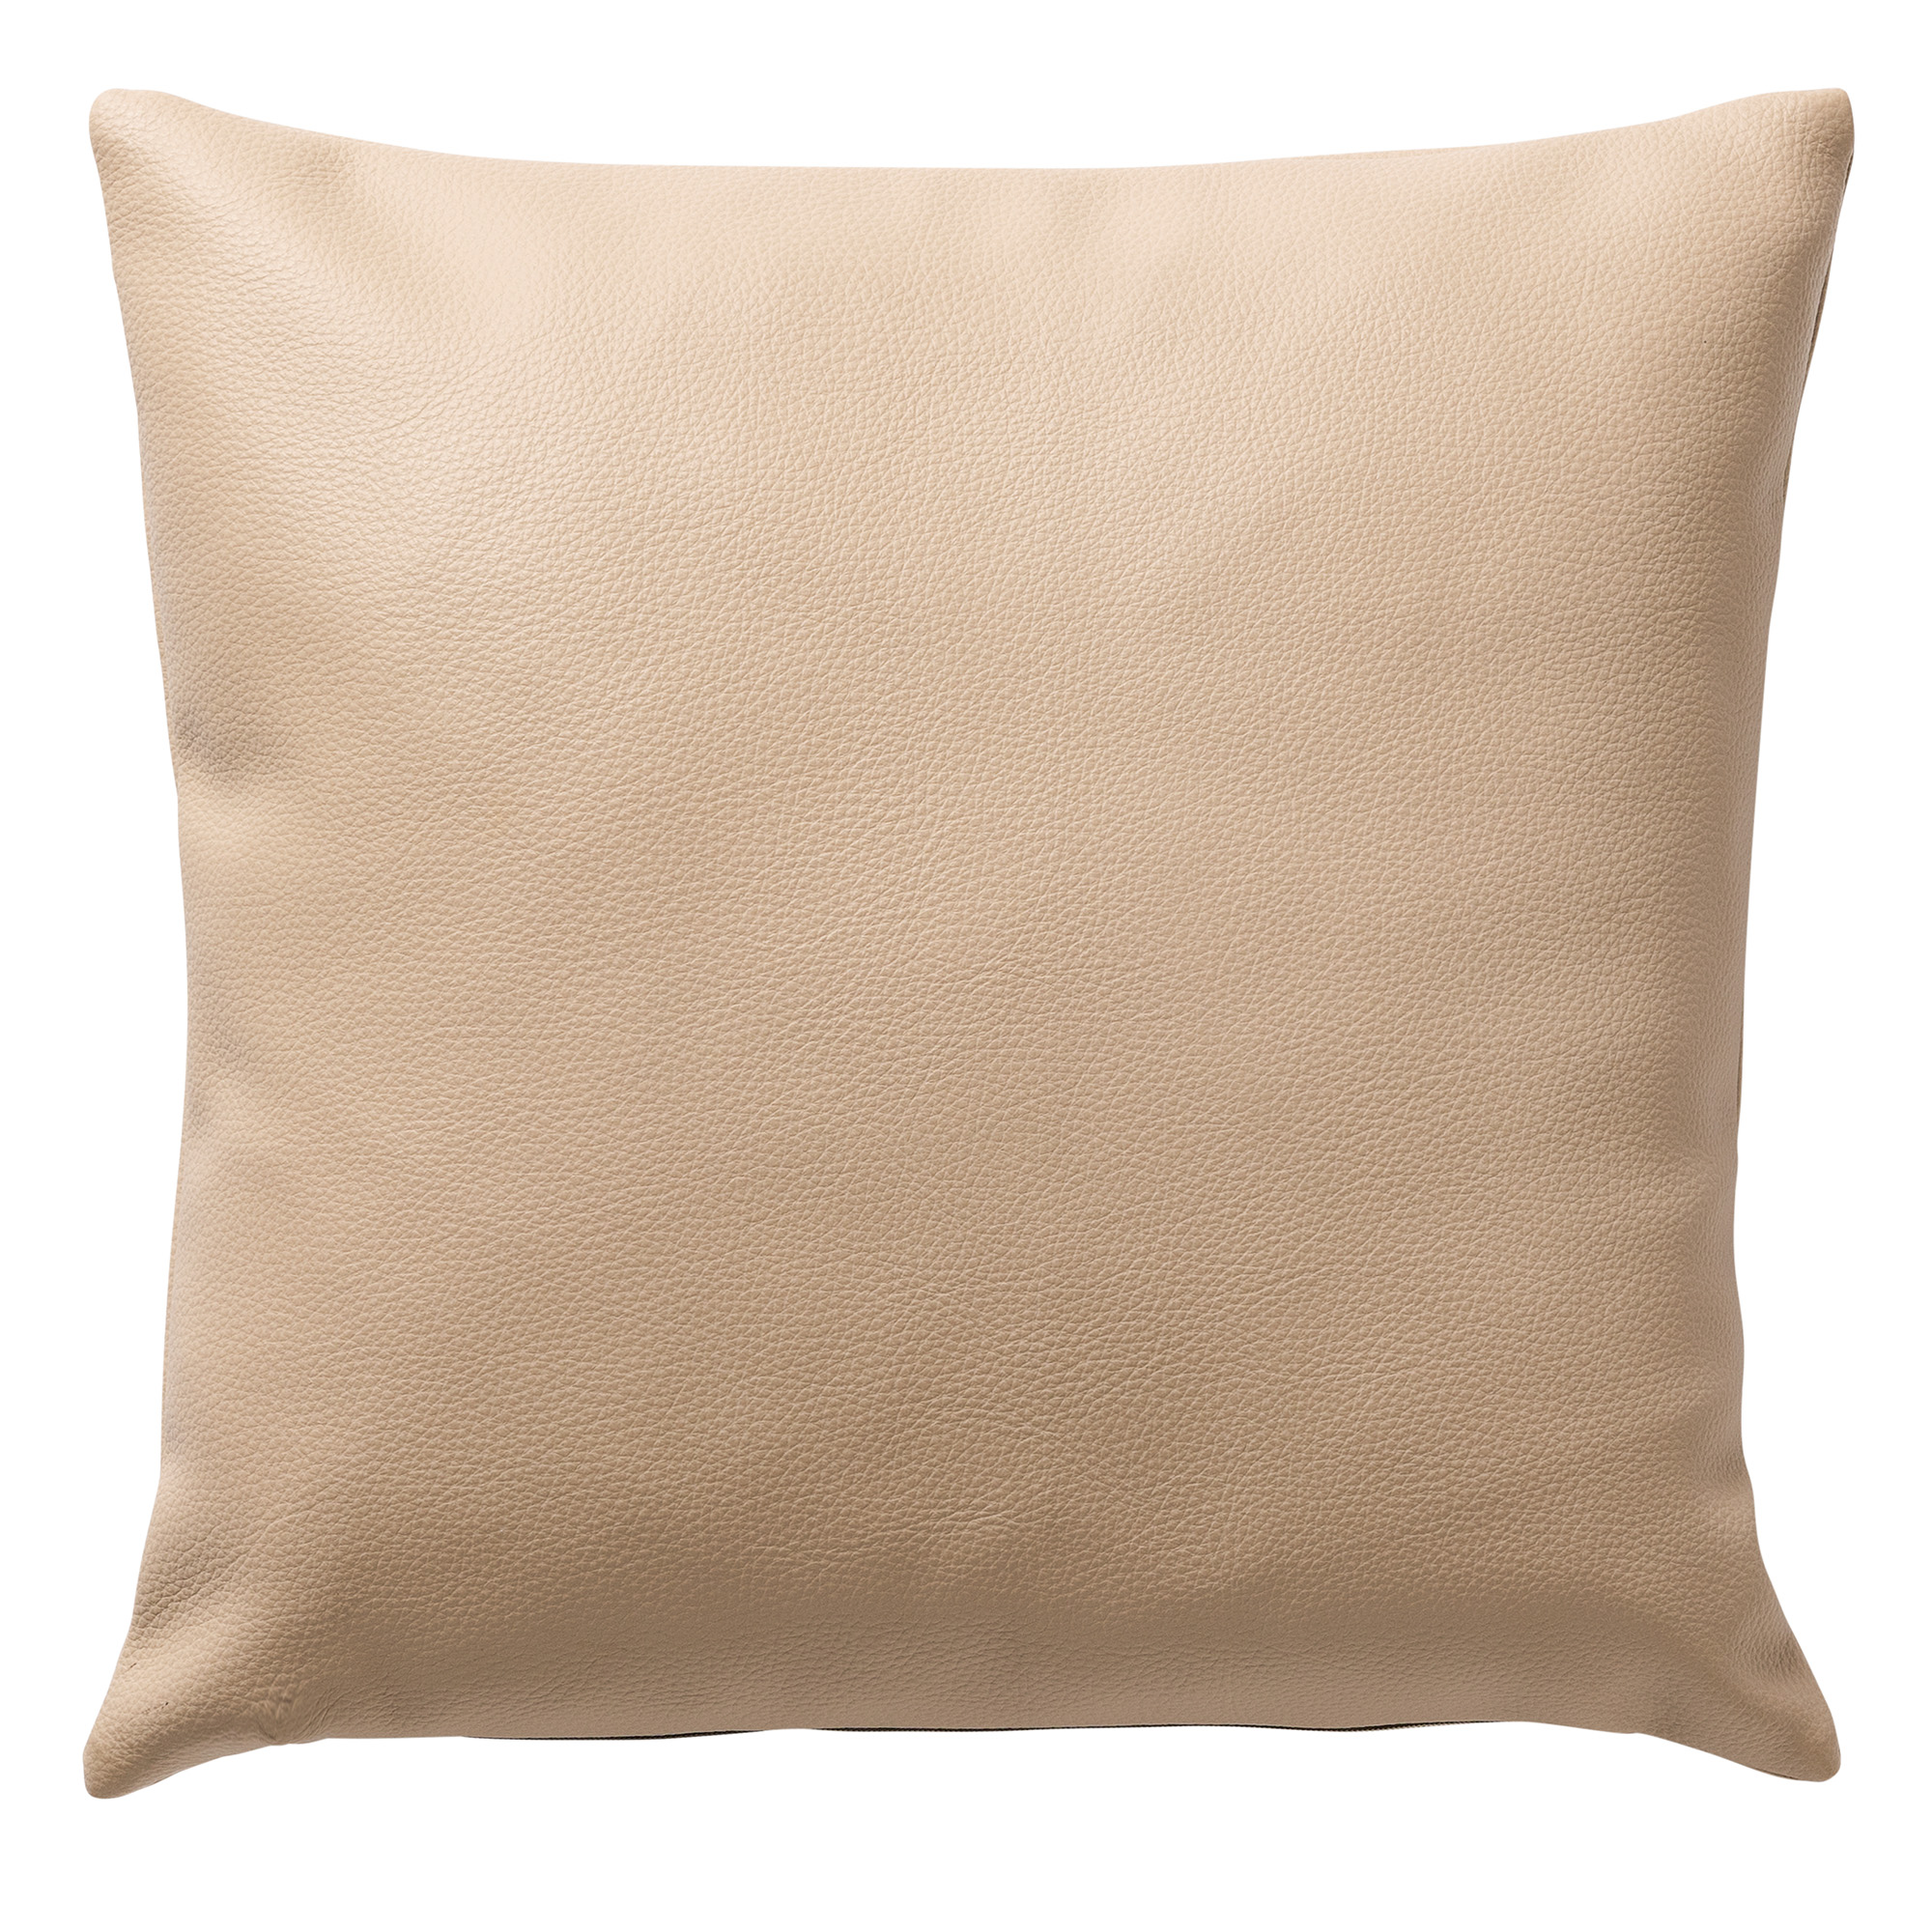 JARED - Cushion 45x45 cm - leather look - solid colour - Irish Cream - beige